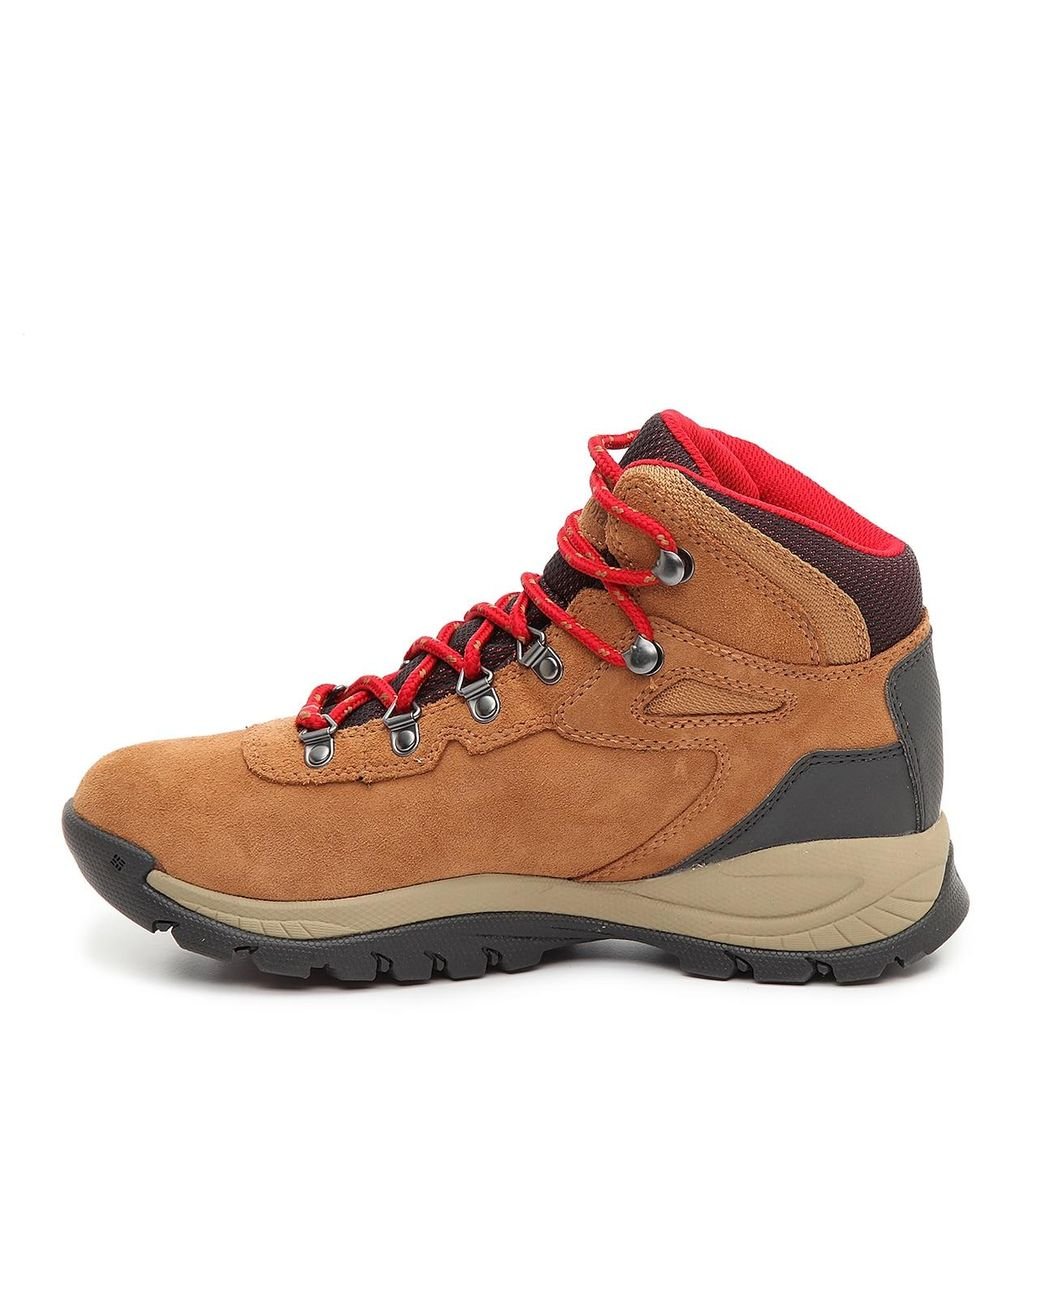 Columbia Leather Newton Ridge Plus Hiking Boot - Save 32% | Lyst